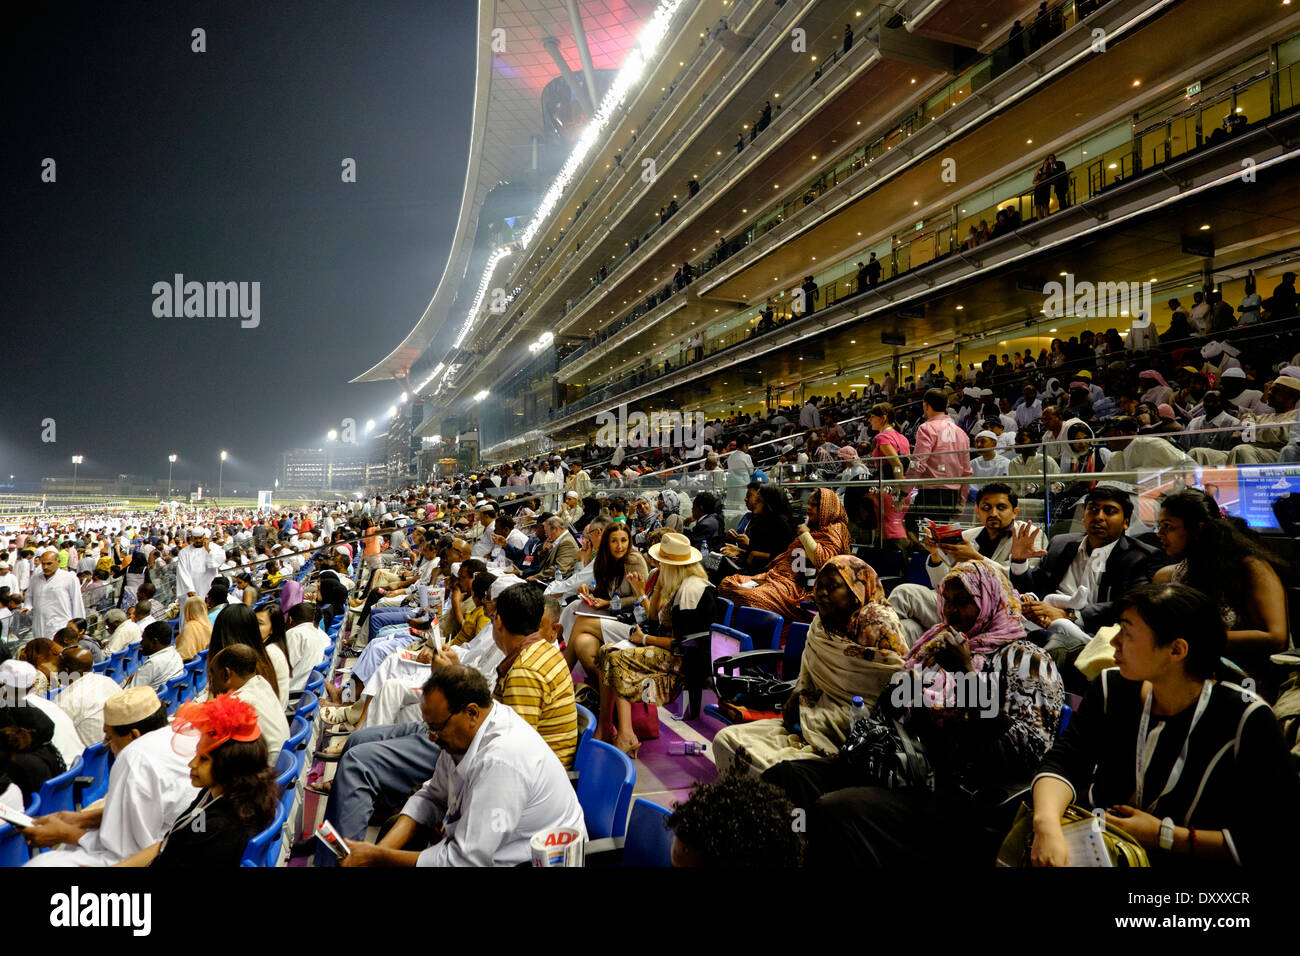 Busy grandstand at Dubai World Cup horse racing championship at Meydan racecourse in Dubai United Arab Emirates Stock Photo